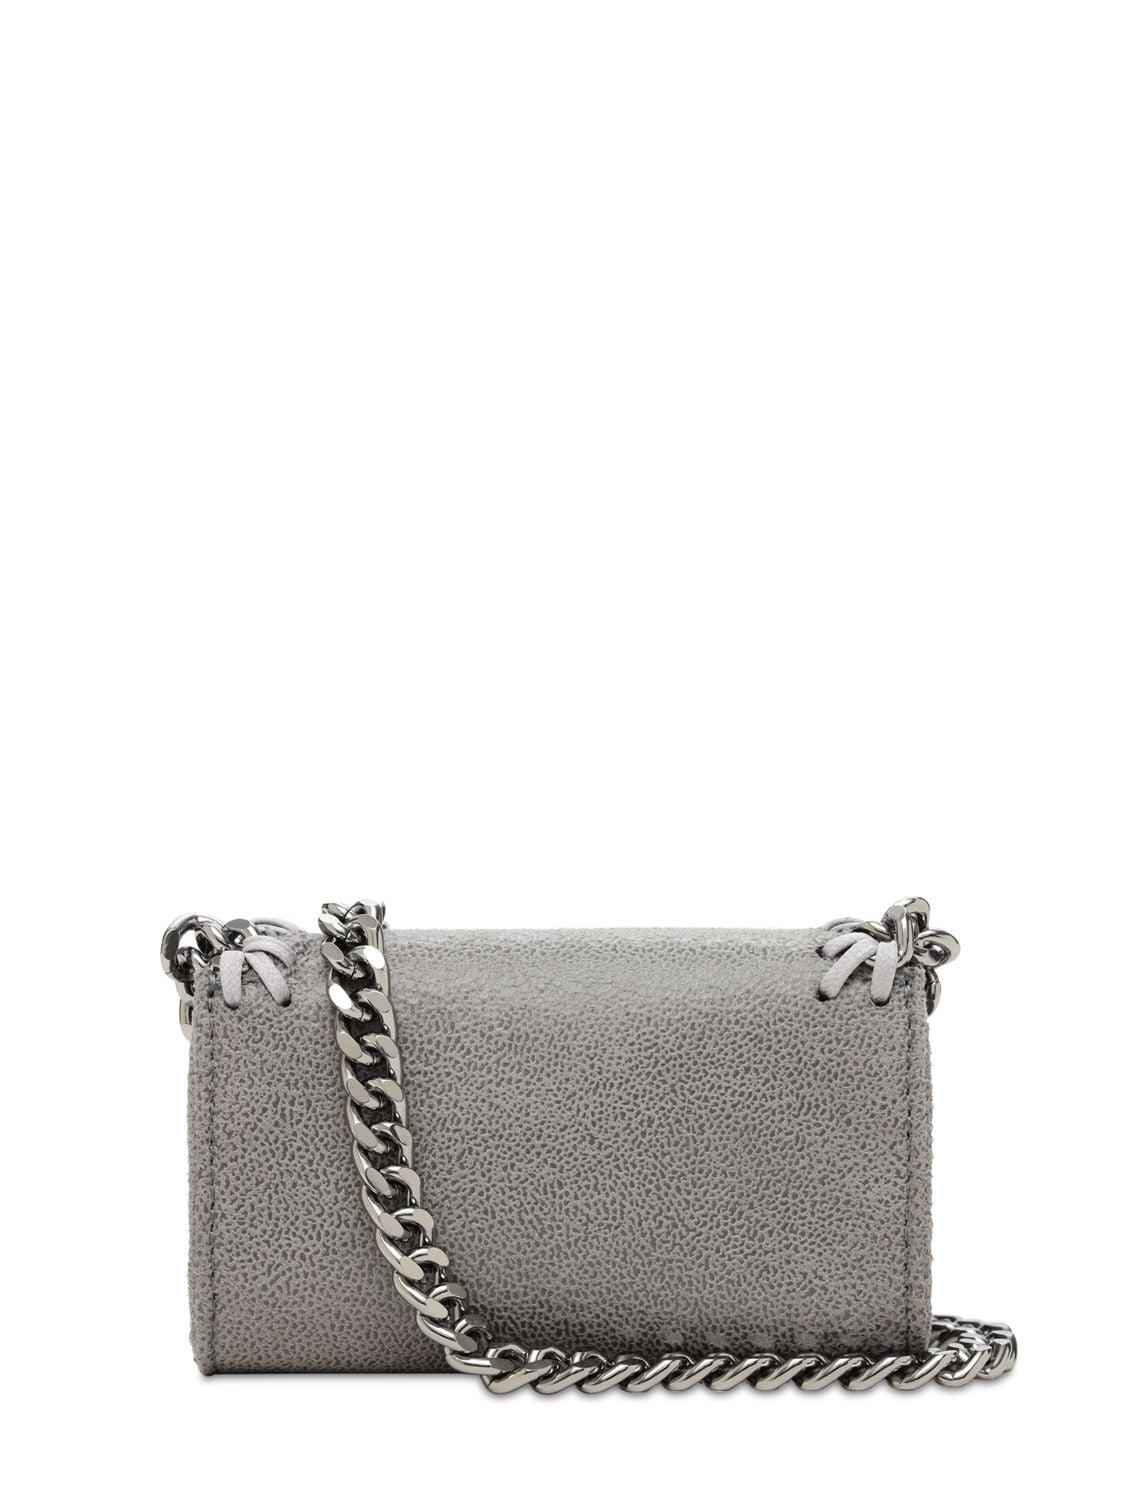 Stella McCartney Falabella Micro Wallet W/ Chain in Light Grey (Gray ...